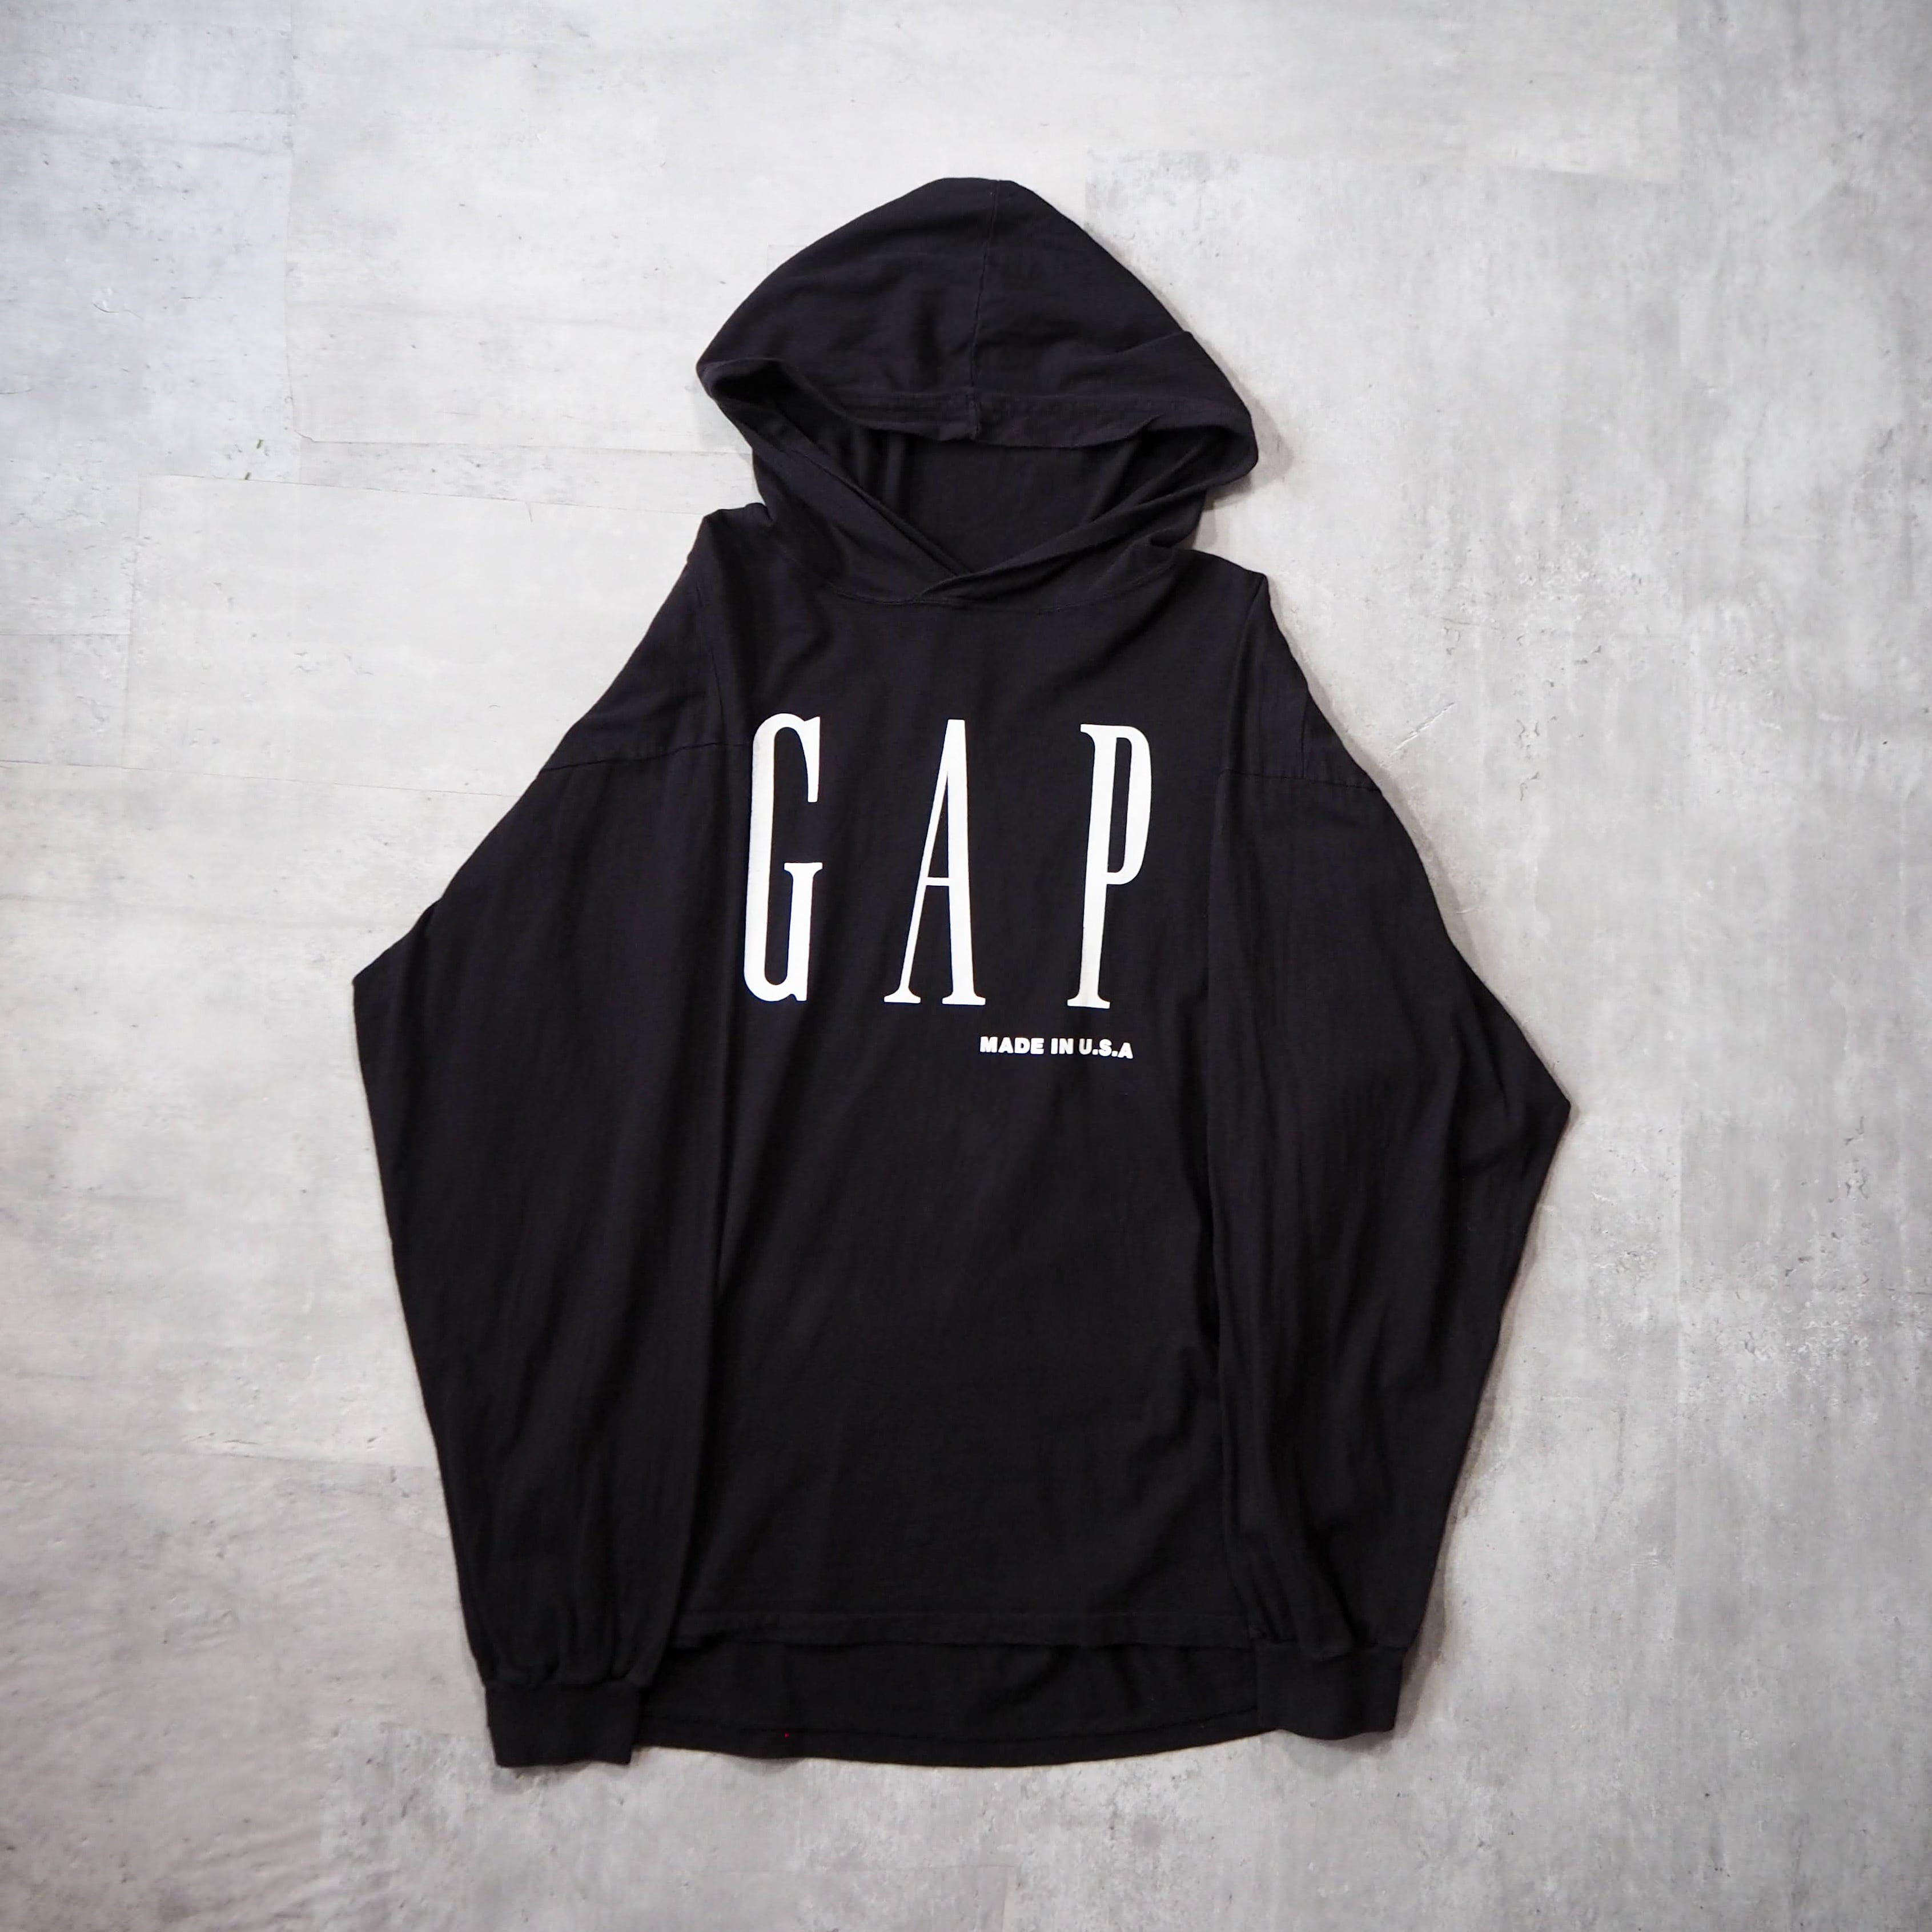 90s “GAP” made in USA logo black hoodie old gap 90年代 オールドギャップ usa製 ブラック フーディ  パーカー 白タグ anti knovum（アンタイノーム）